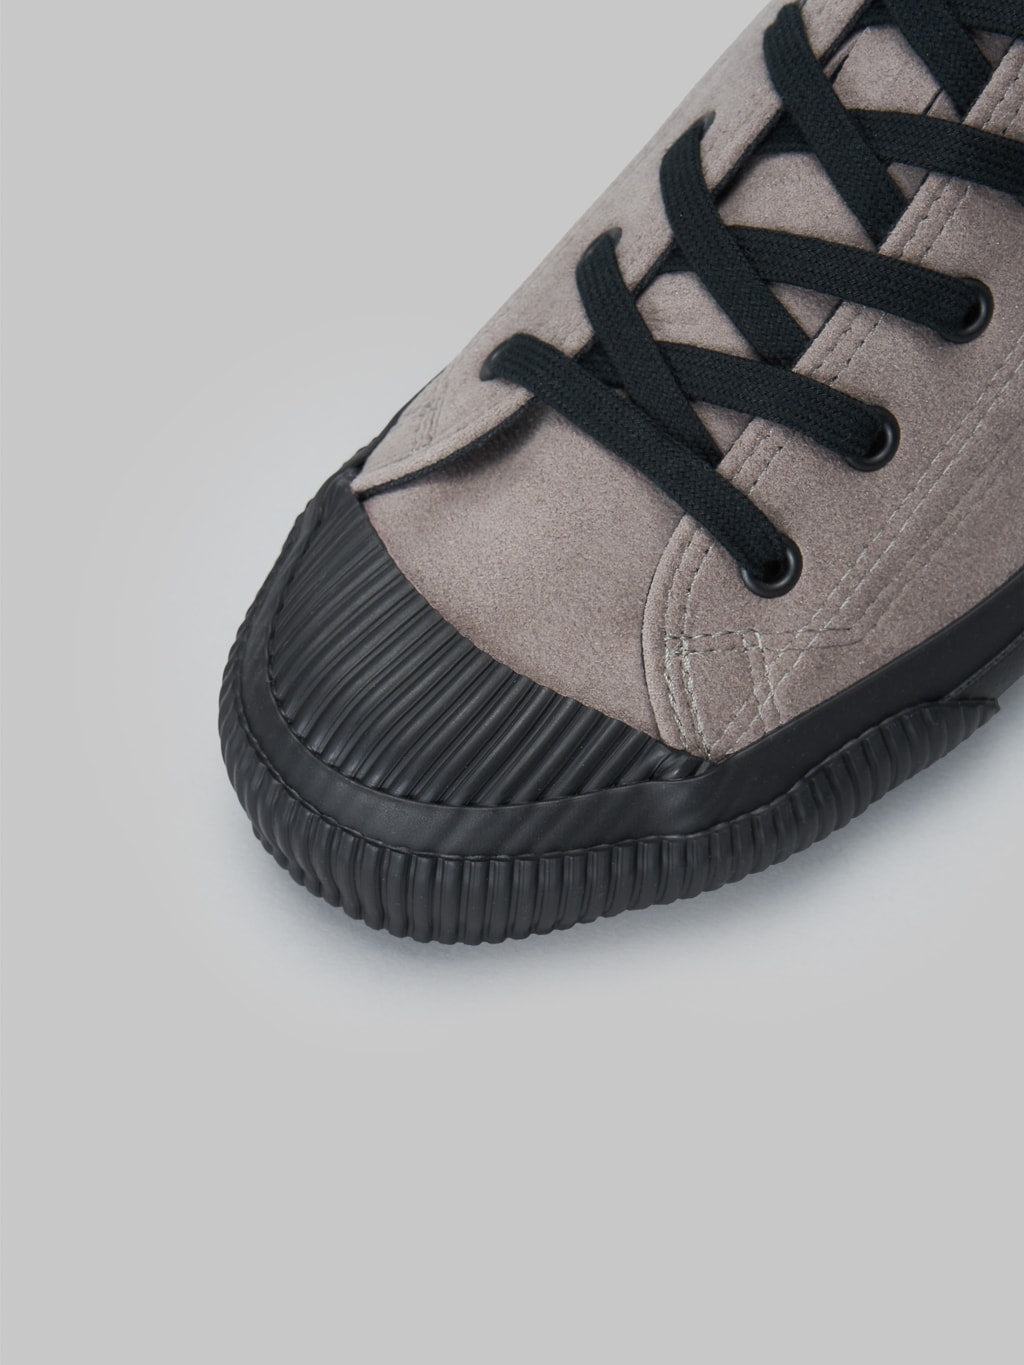 Pras shellcap low vegan sneakers suede grey black japan made